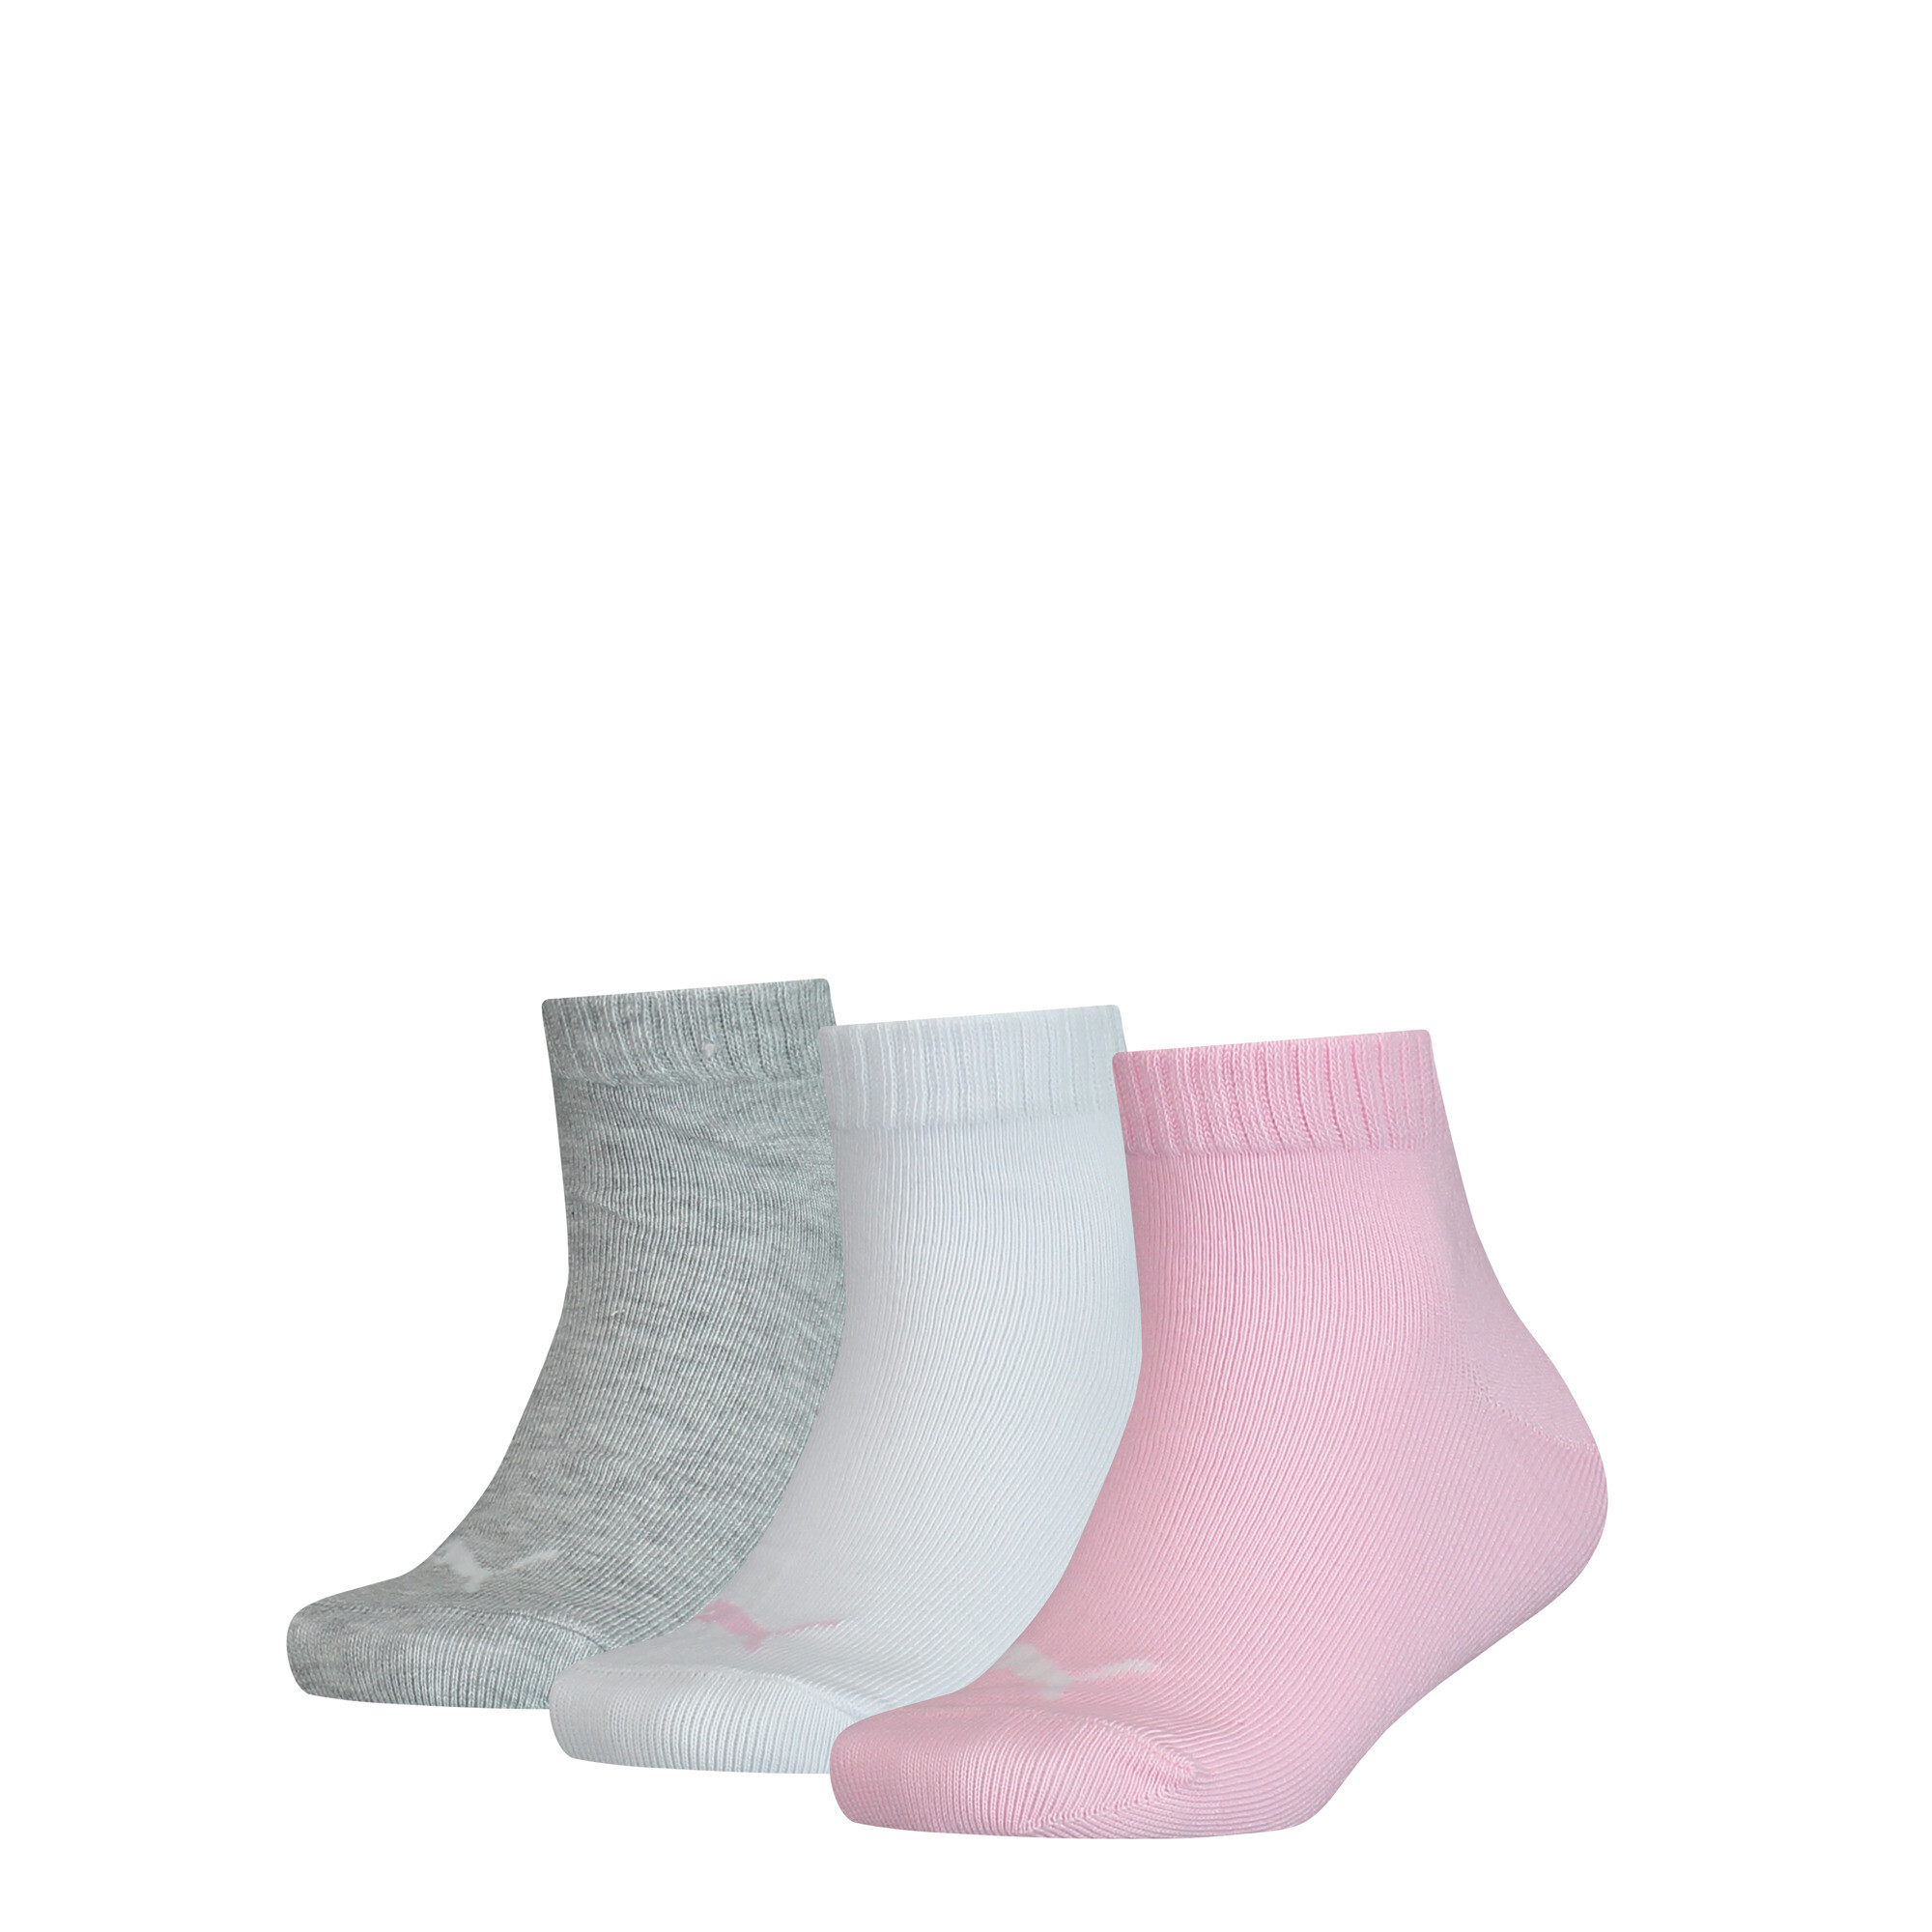 Kids' PUMA Quarter Socks 3 Pack In Pink, Size 23-26